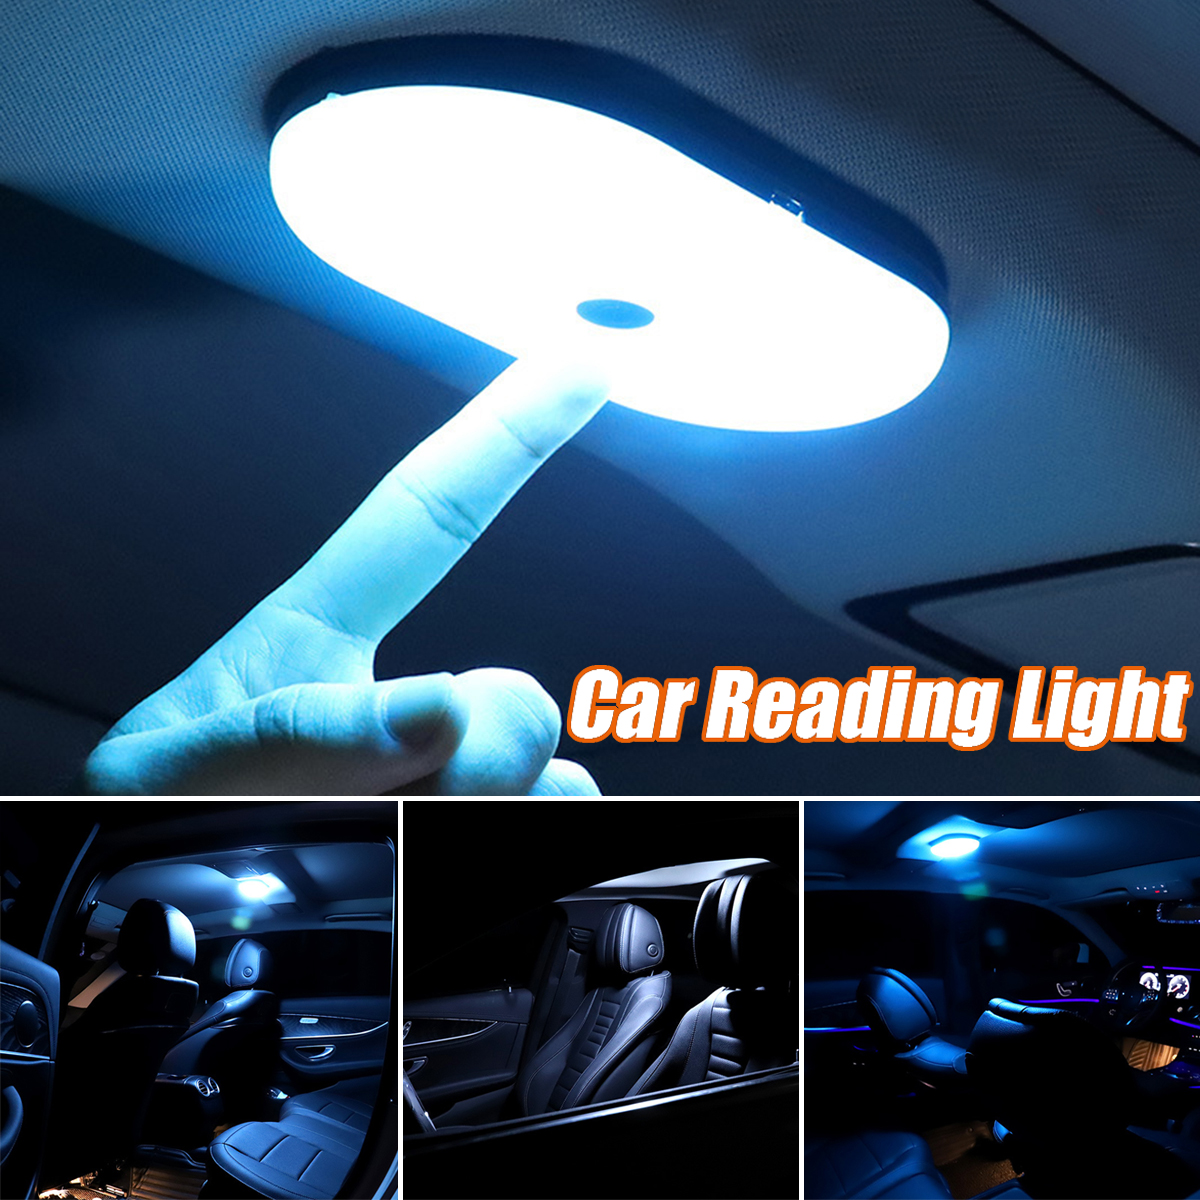 Car-Roof--Interior-LED-Reading-Light-Magnet-Ceiling-Lamp-USB-Convertible--Light-1675234-2